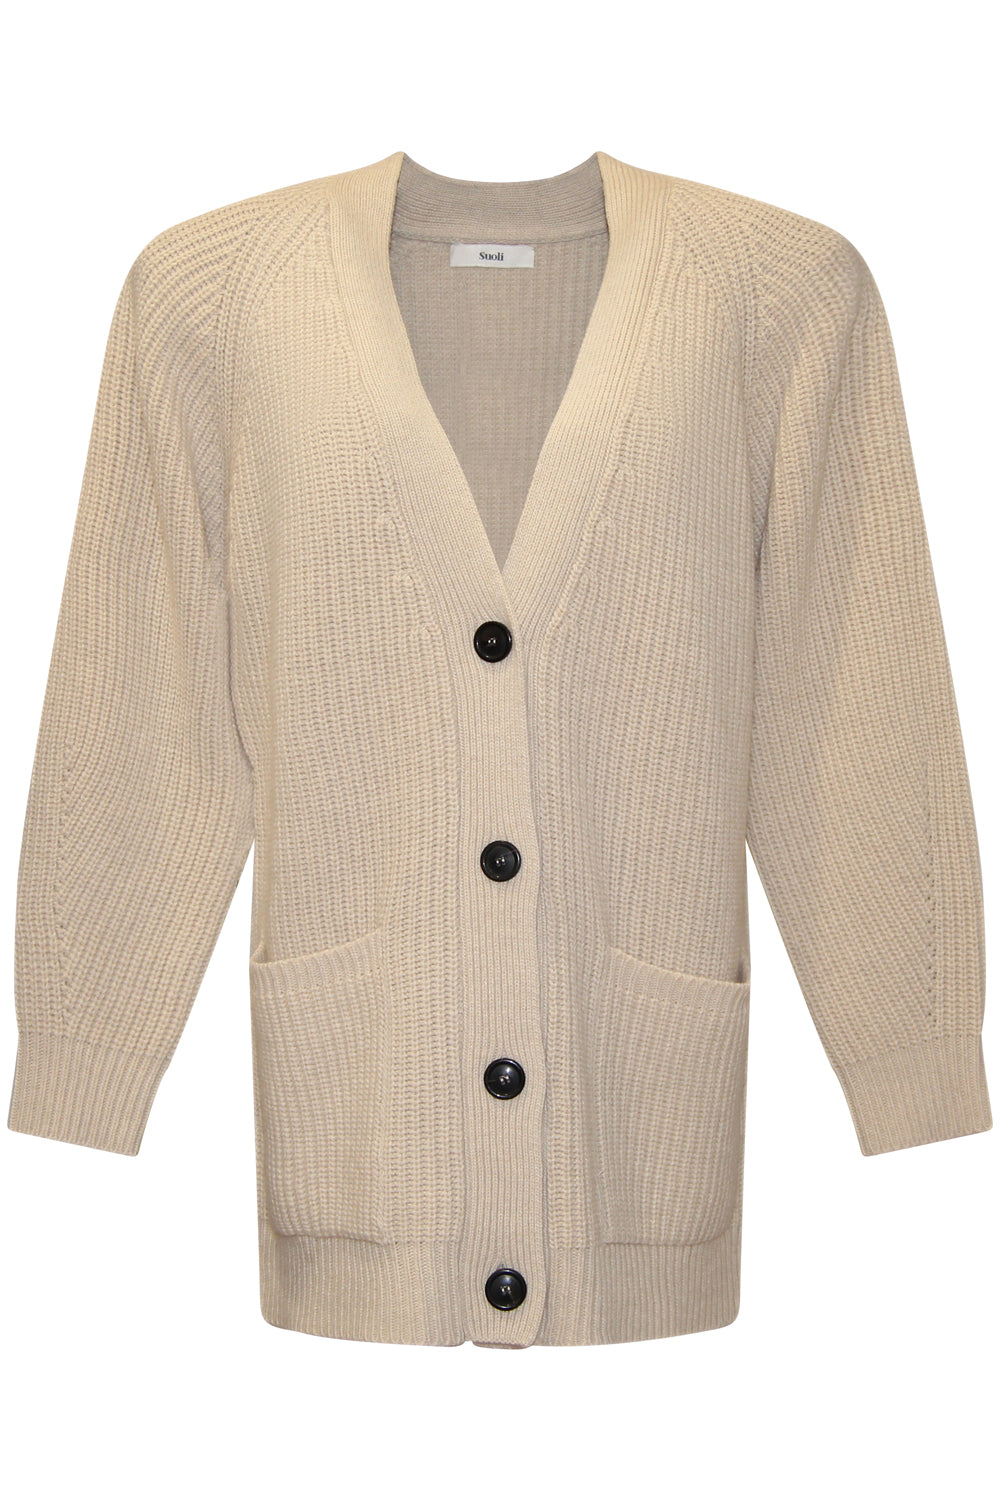 Image of SUOLI Cardigan in misto lana e cashmere